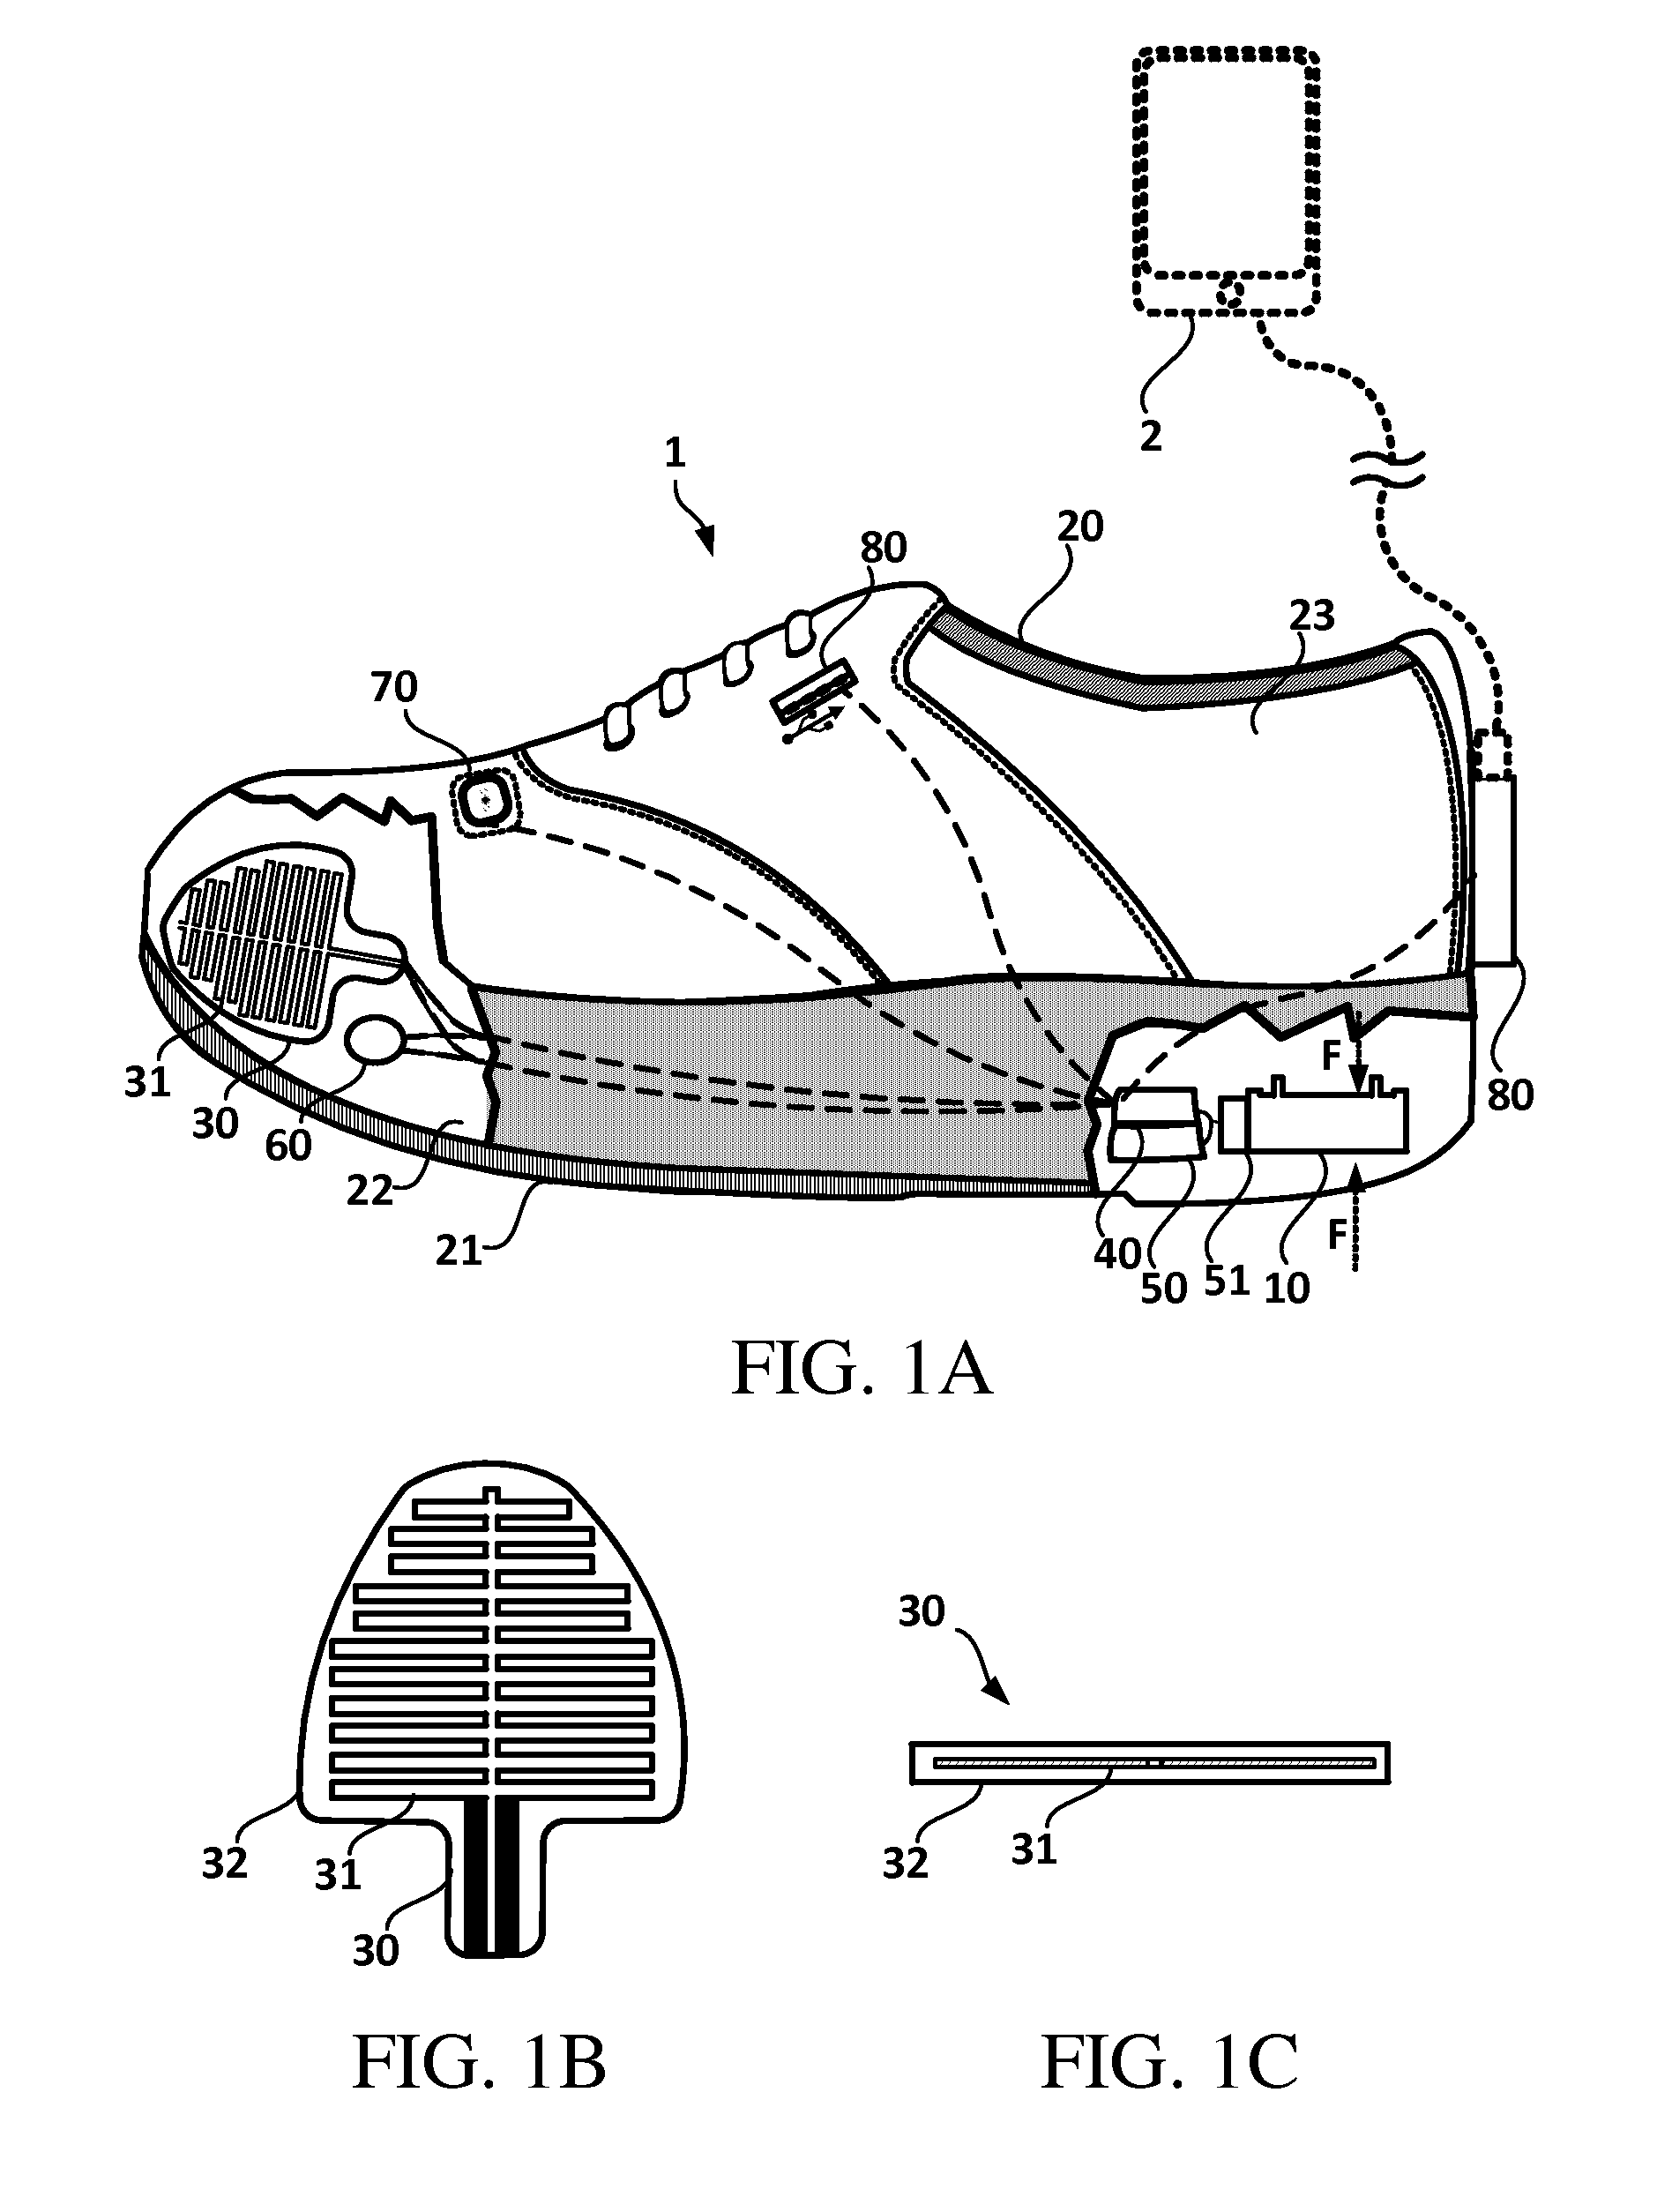 Heat-generating shoe